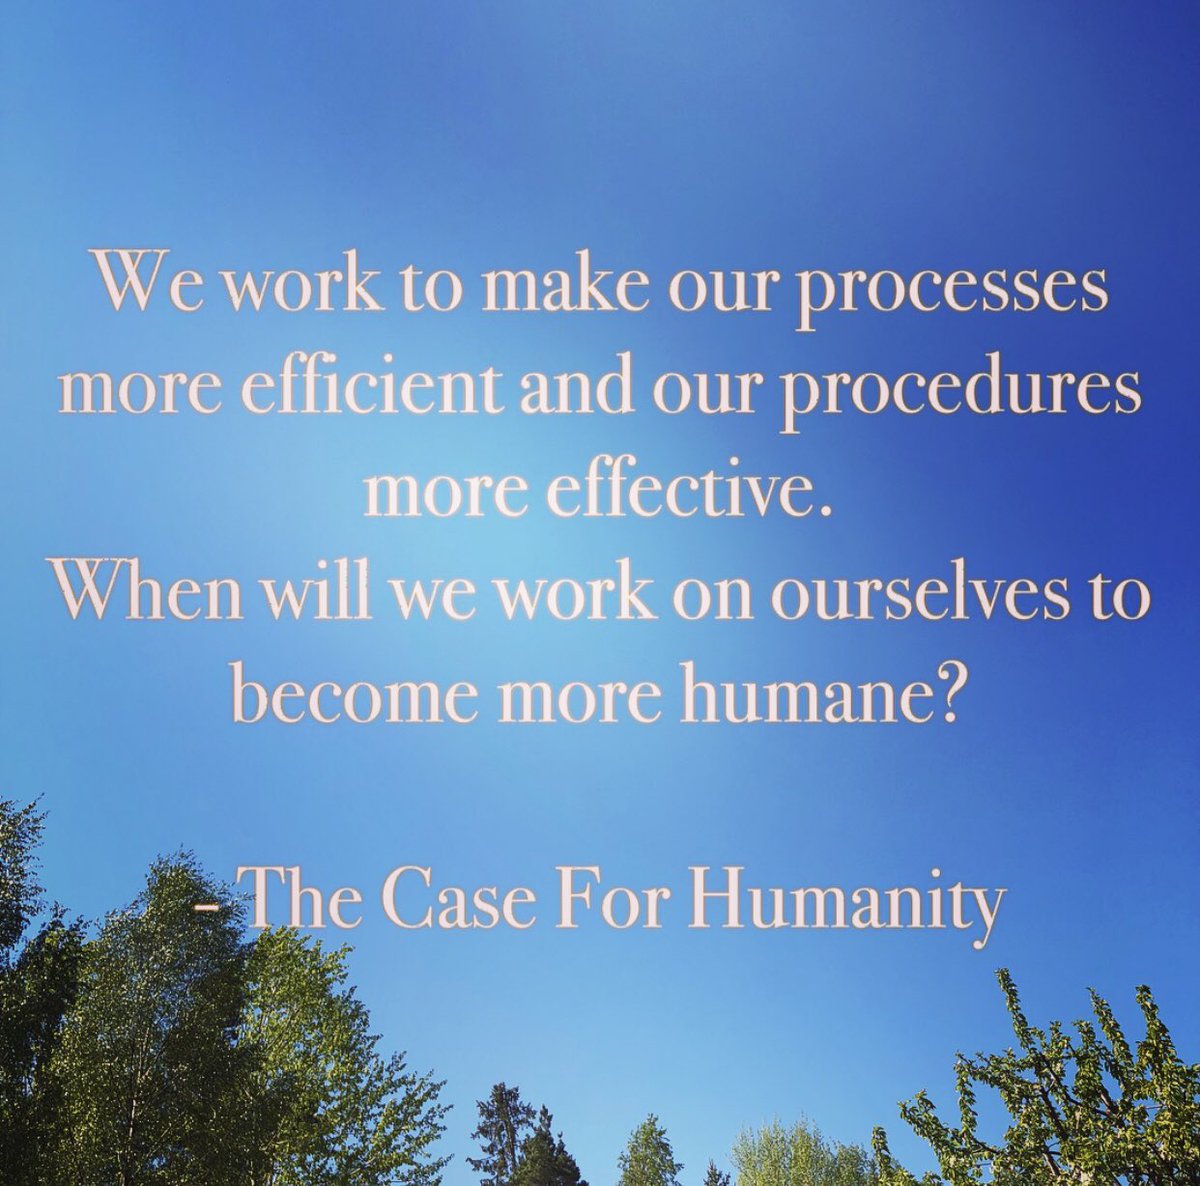 The Case 4 Humanity (@CaseforHumanity) on Twitter photo 2018-07-28 19:16:52